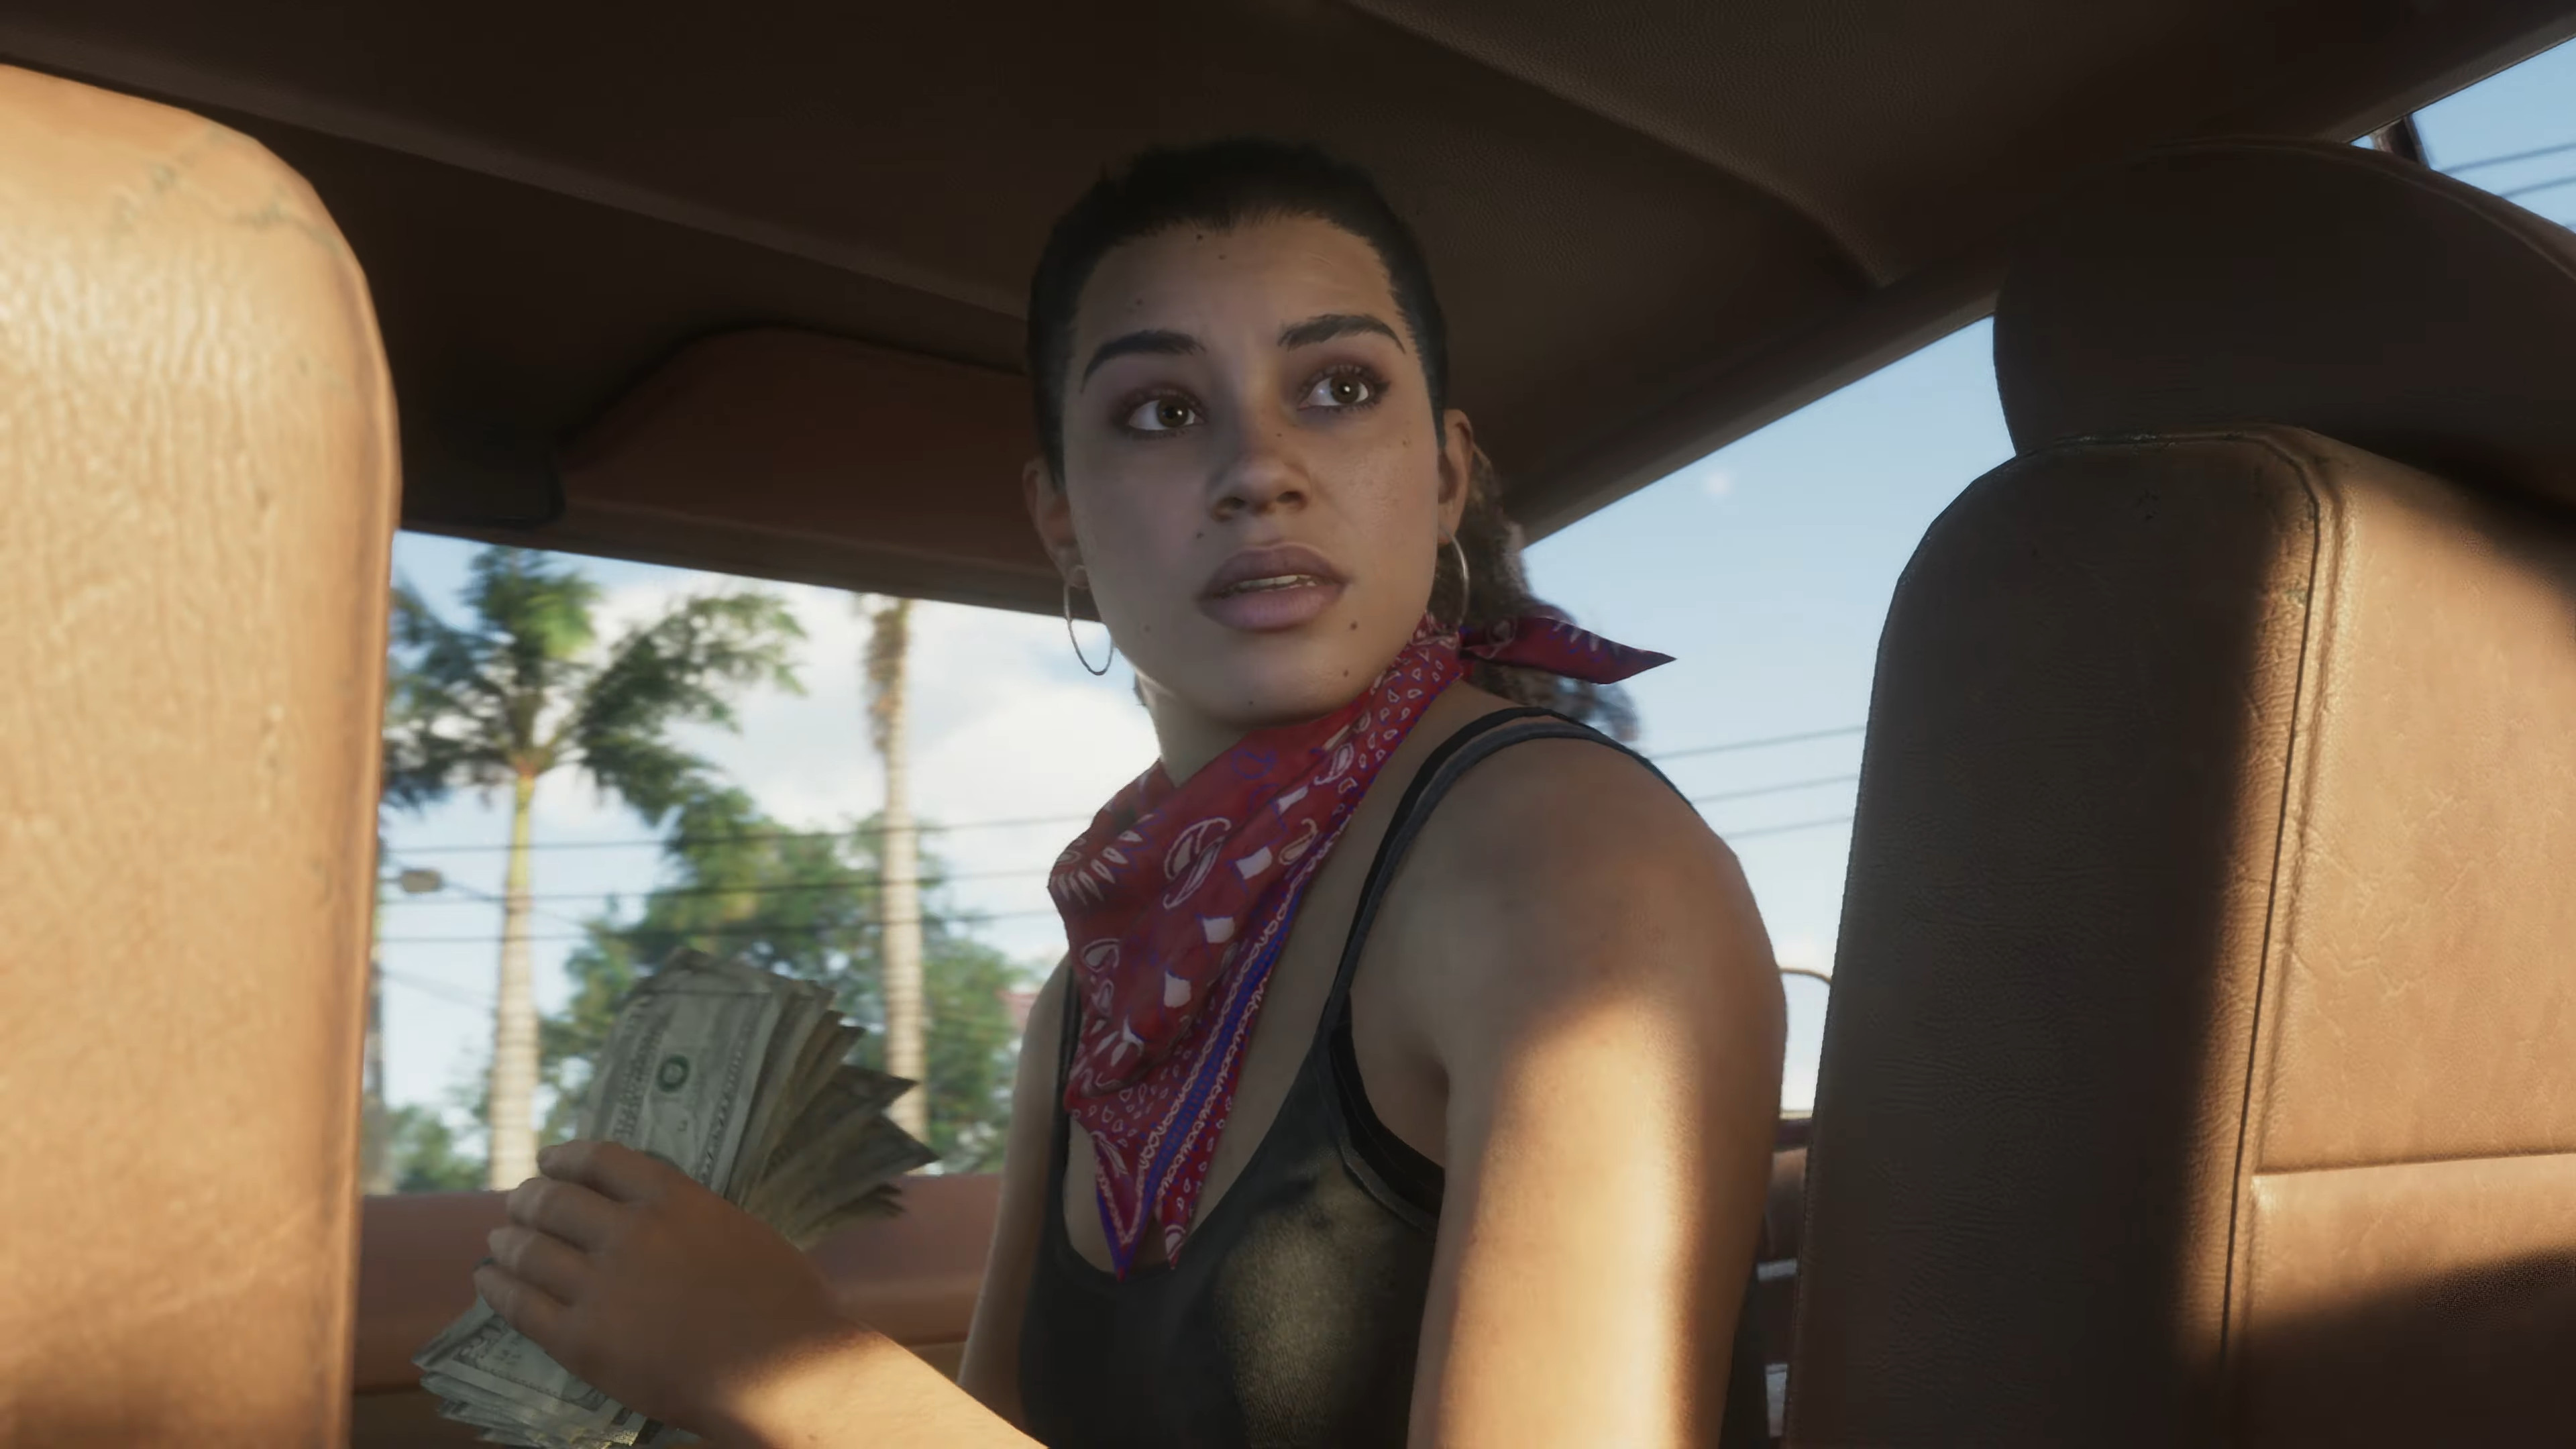 Rockstar Drops Social Club Branding in Lead-Up to GTA 6